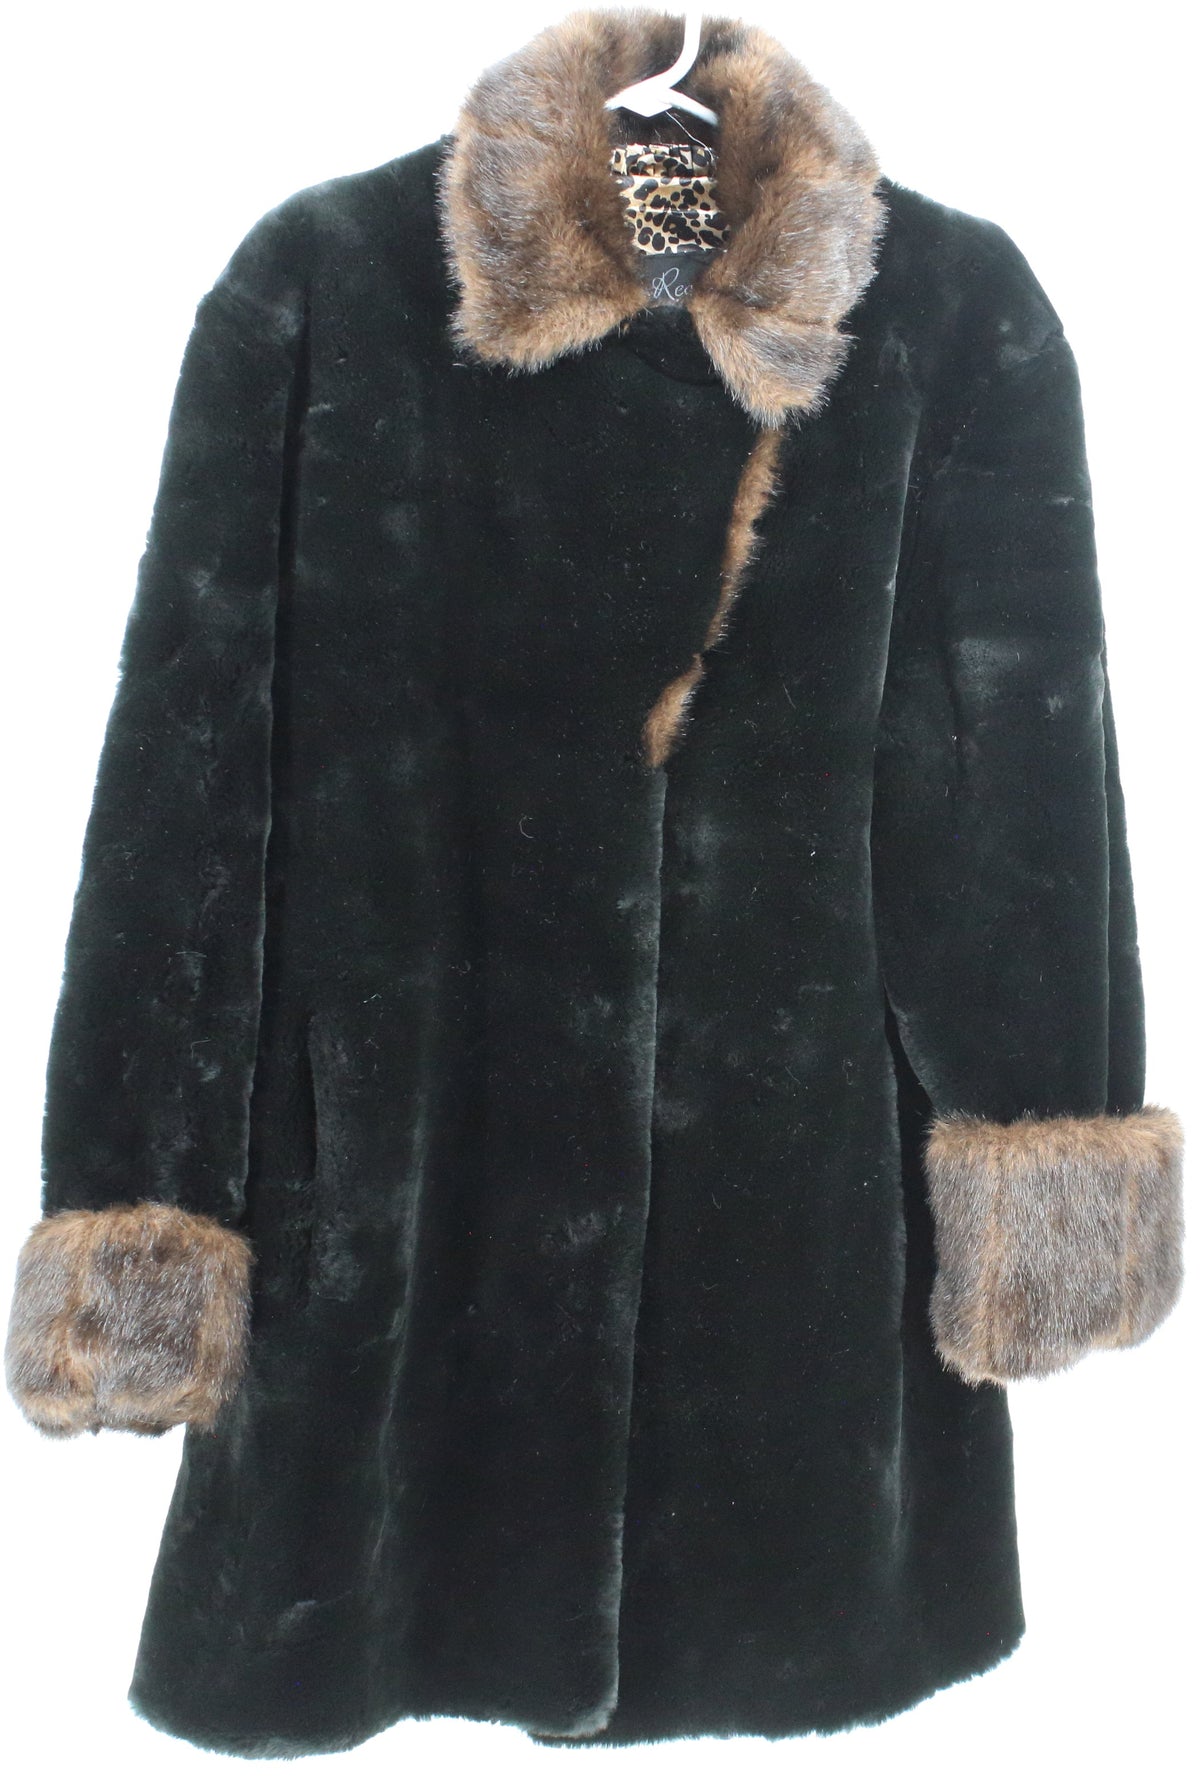 Regal Black Faux Fur Coat With Cheetah Print Lining